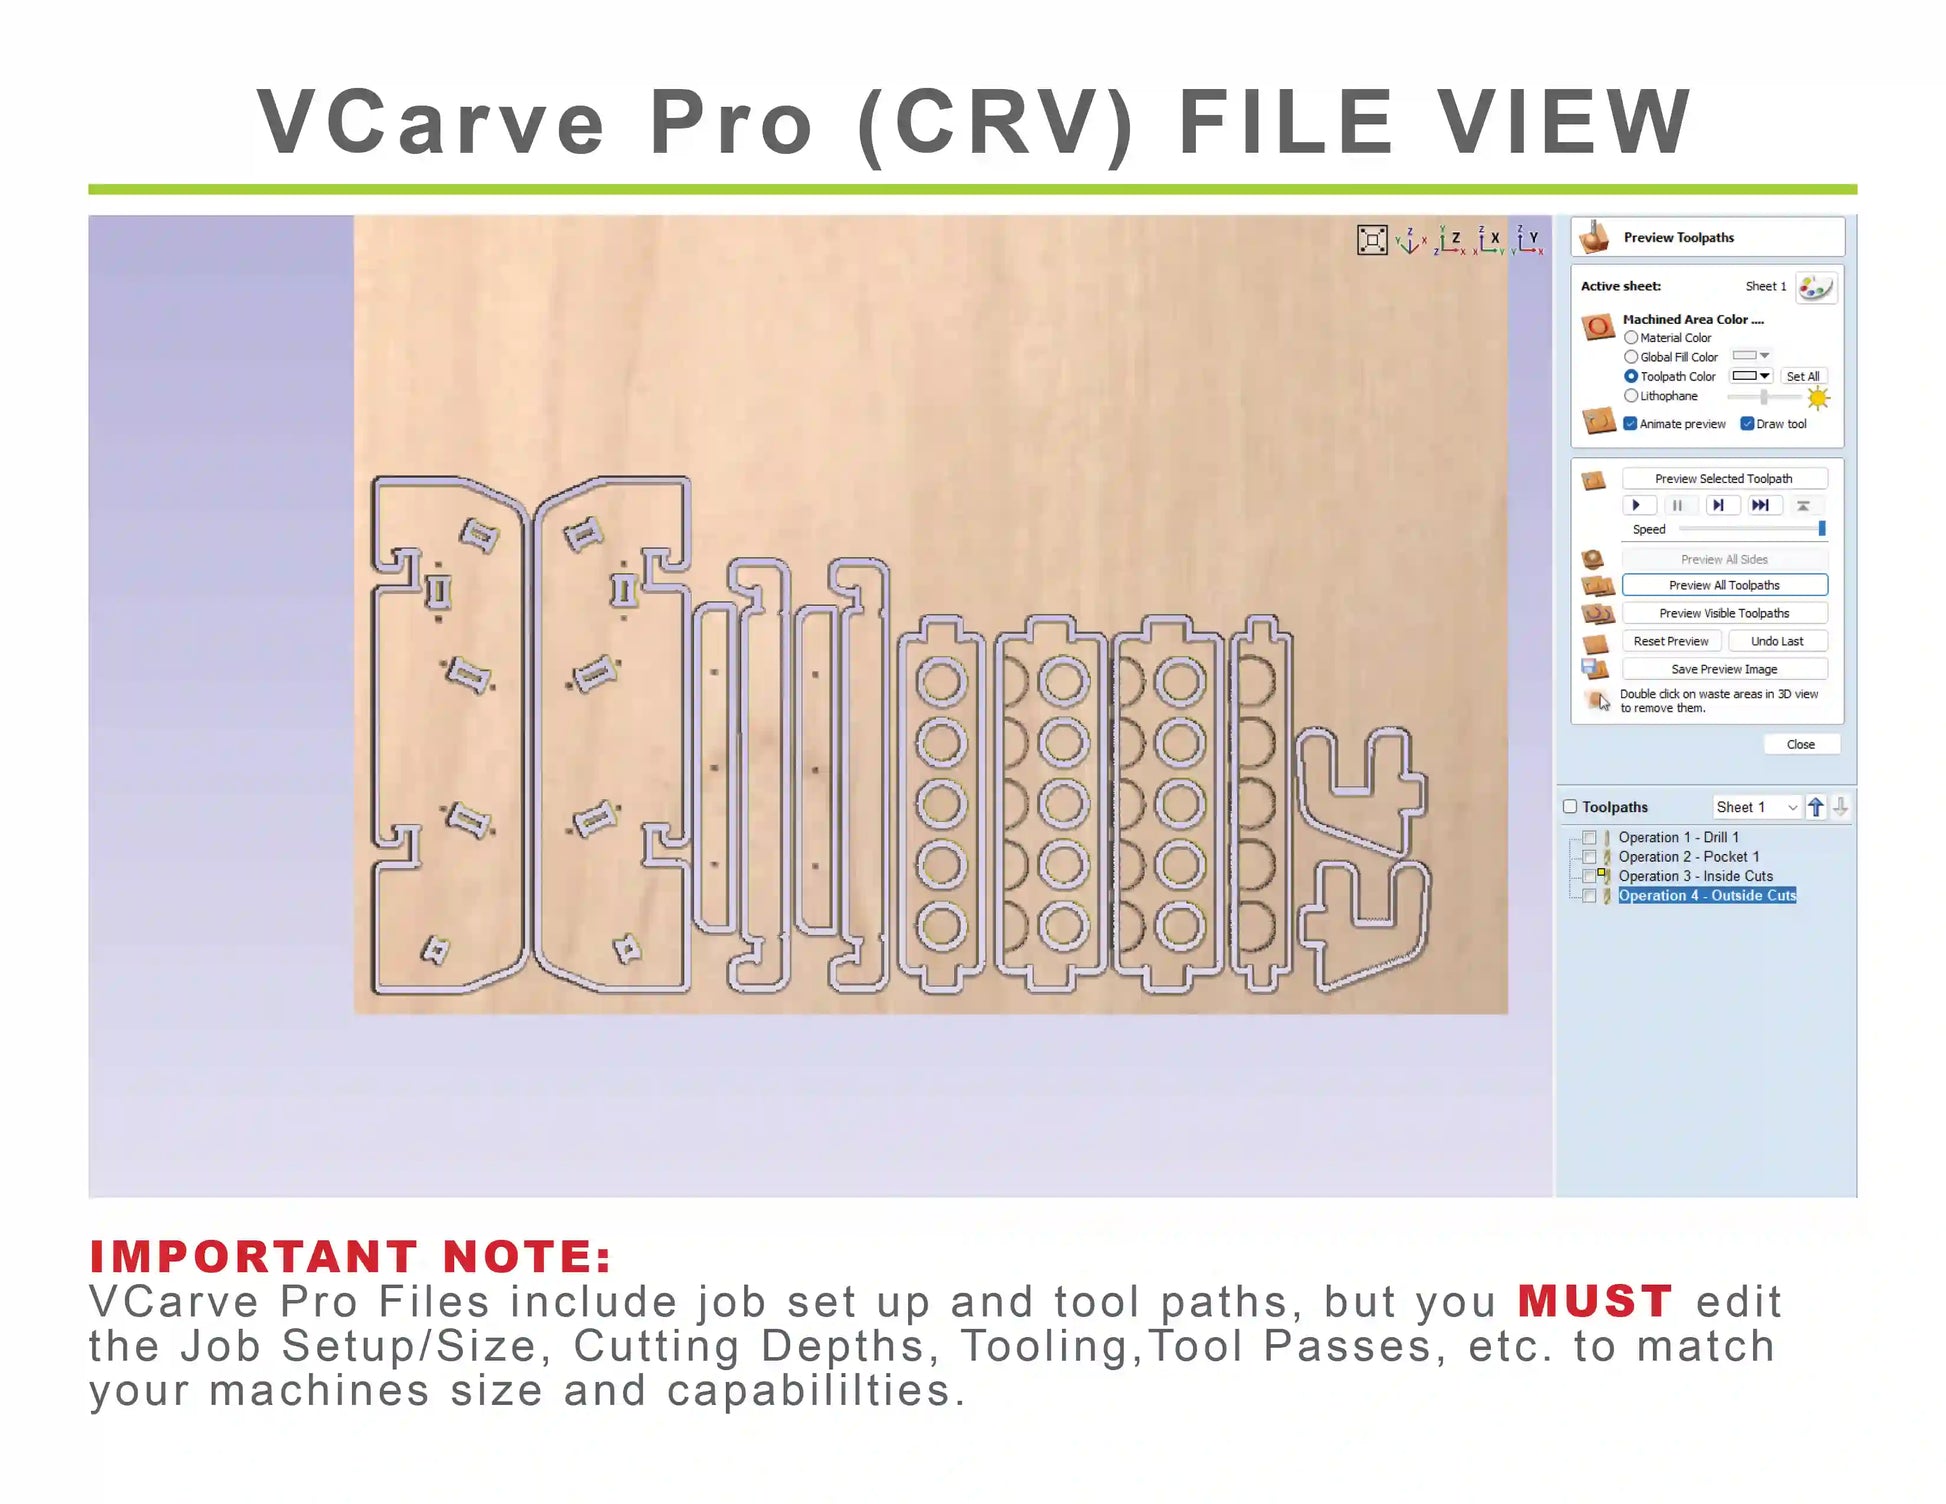 caulk tube holder vectric vcarve crv files with toolpaths with a 1/4" endmill